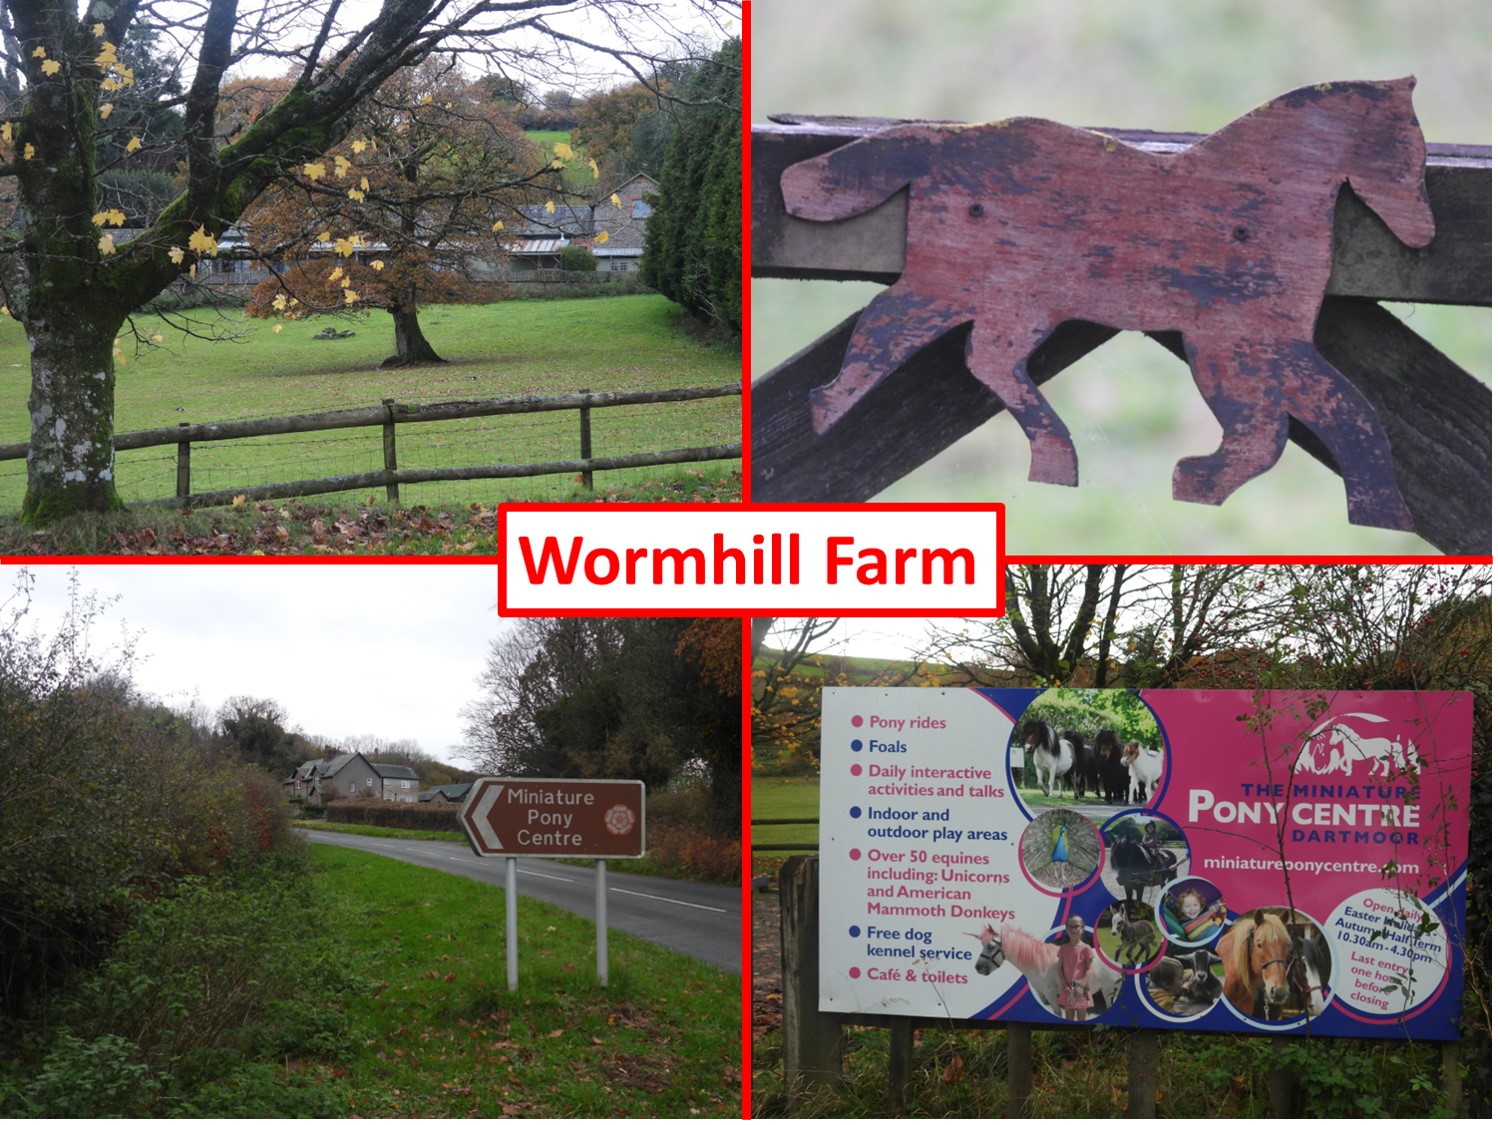 Wormhill Farm